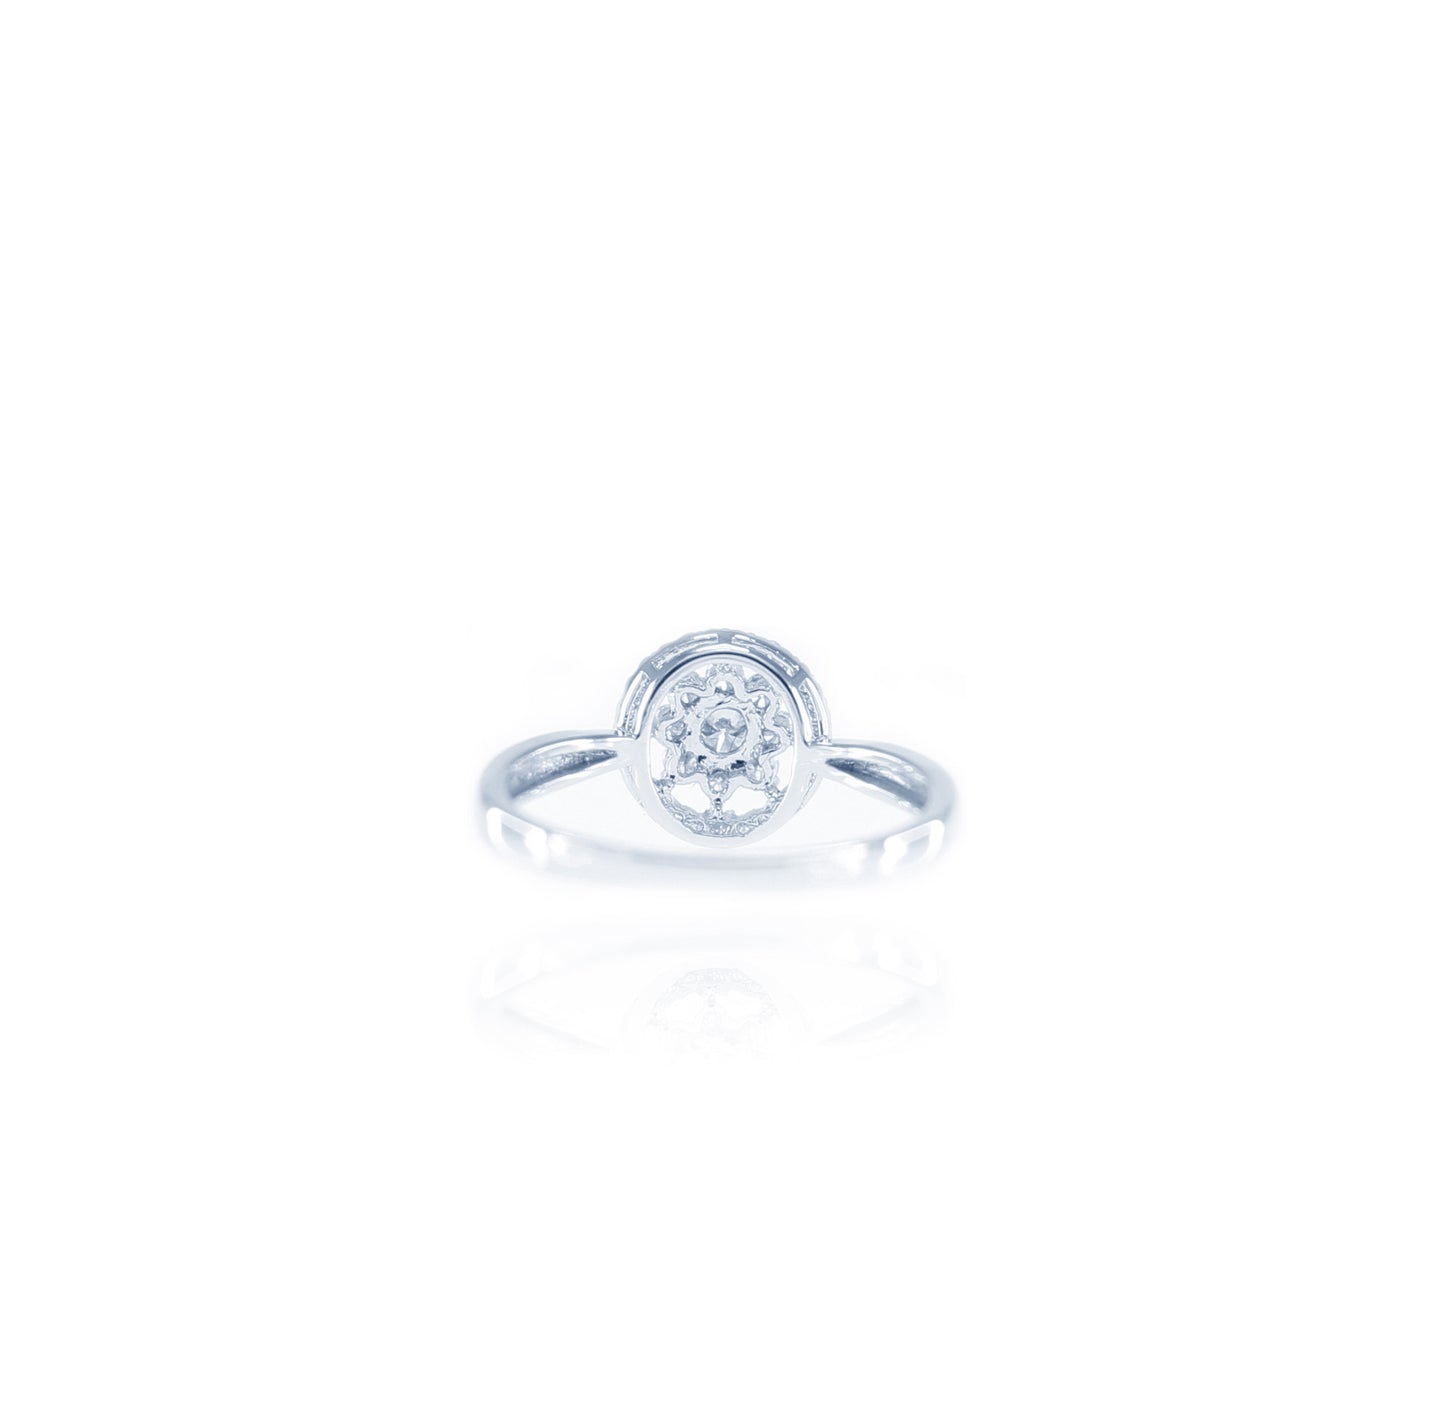 Round Flower Diamond Ring in 18K White Gold